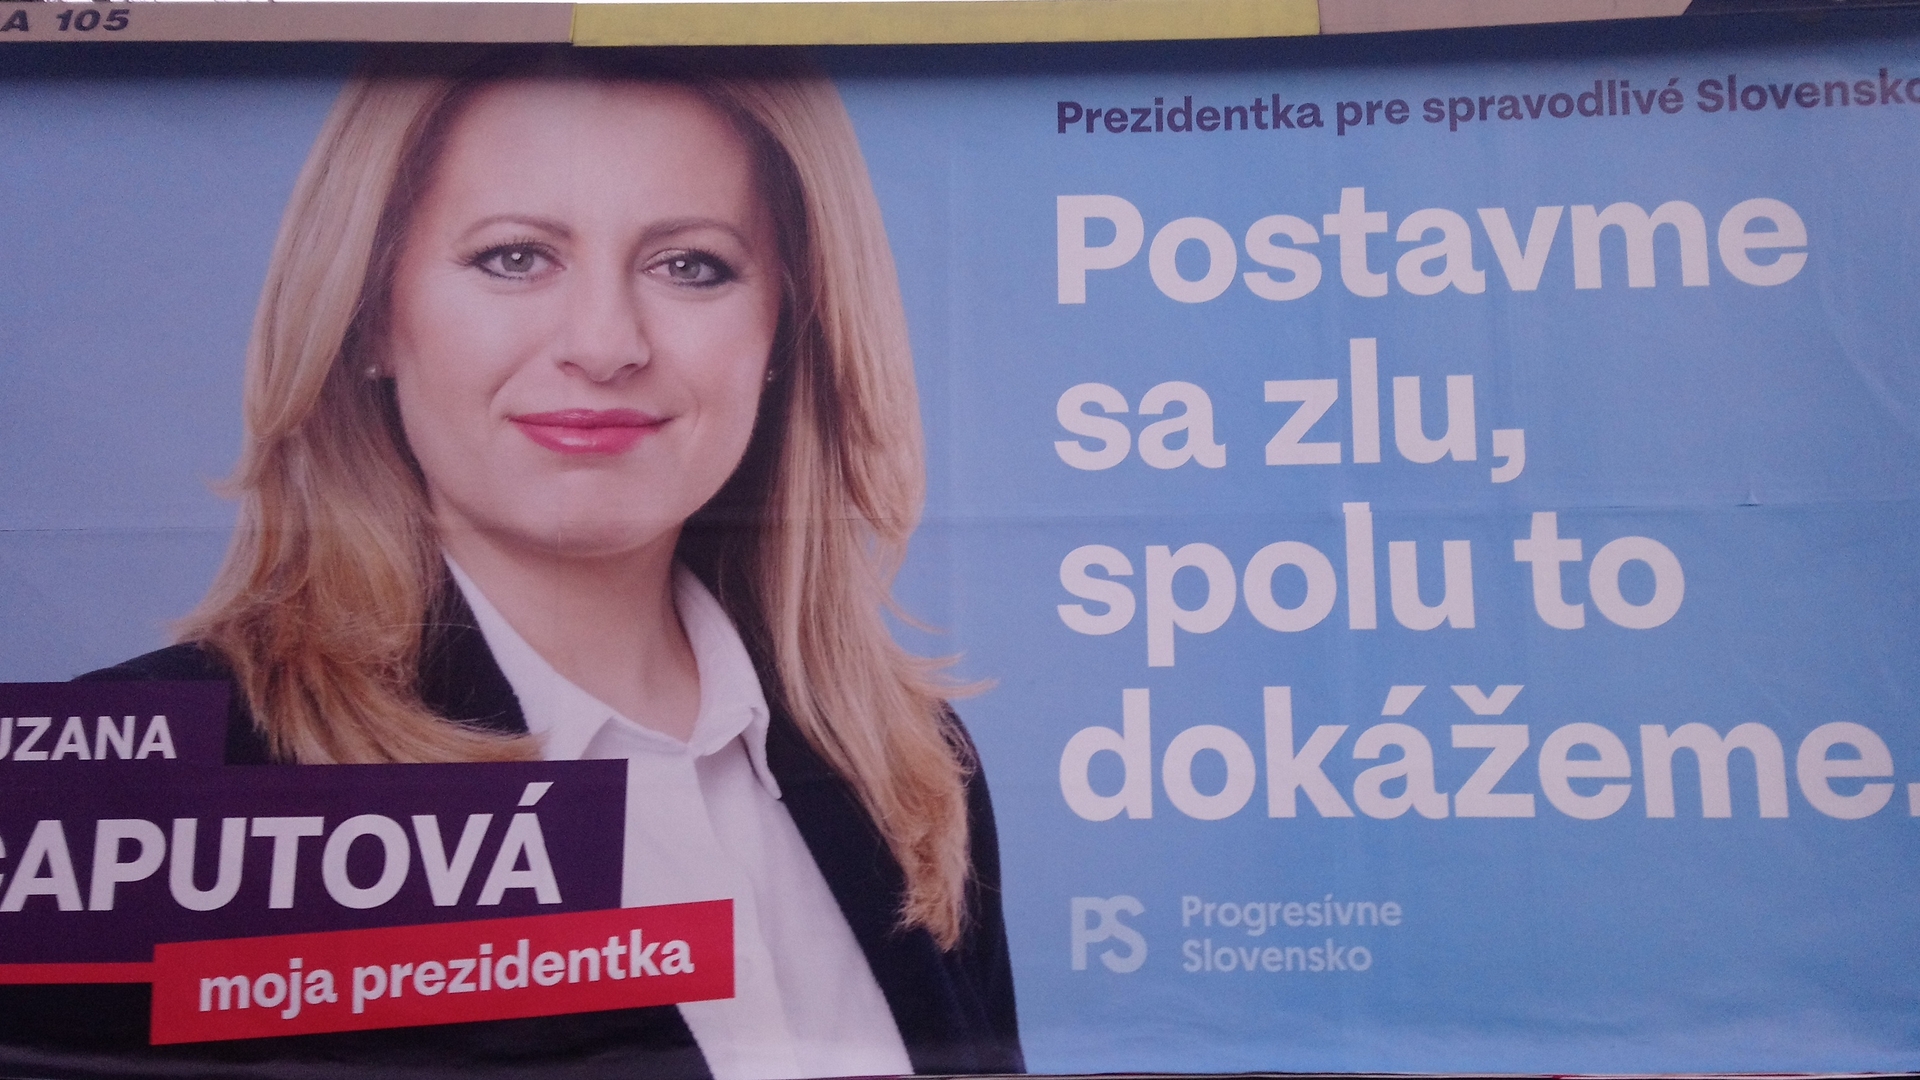 Caputova_billboard_2019